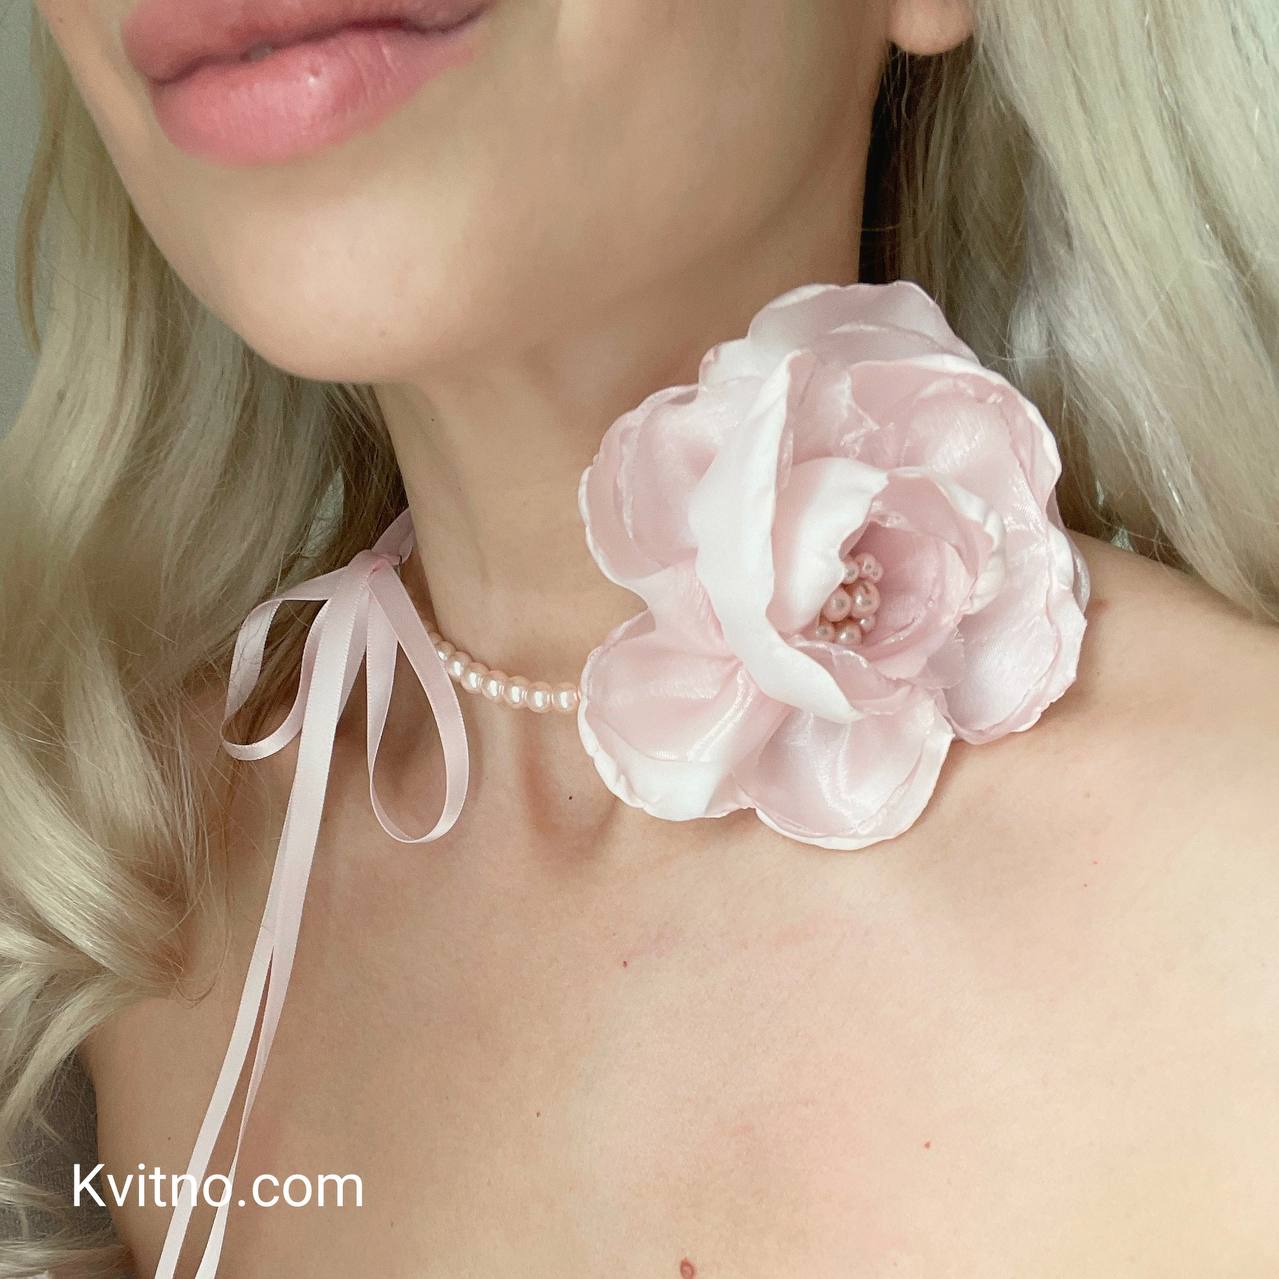 Light Pink Flower Choker Necklace - Romantic and Feminine Look